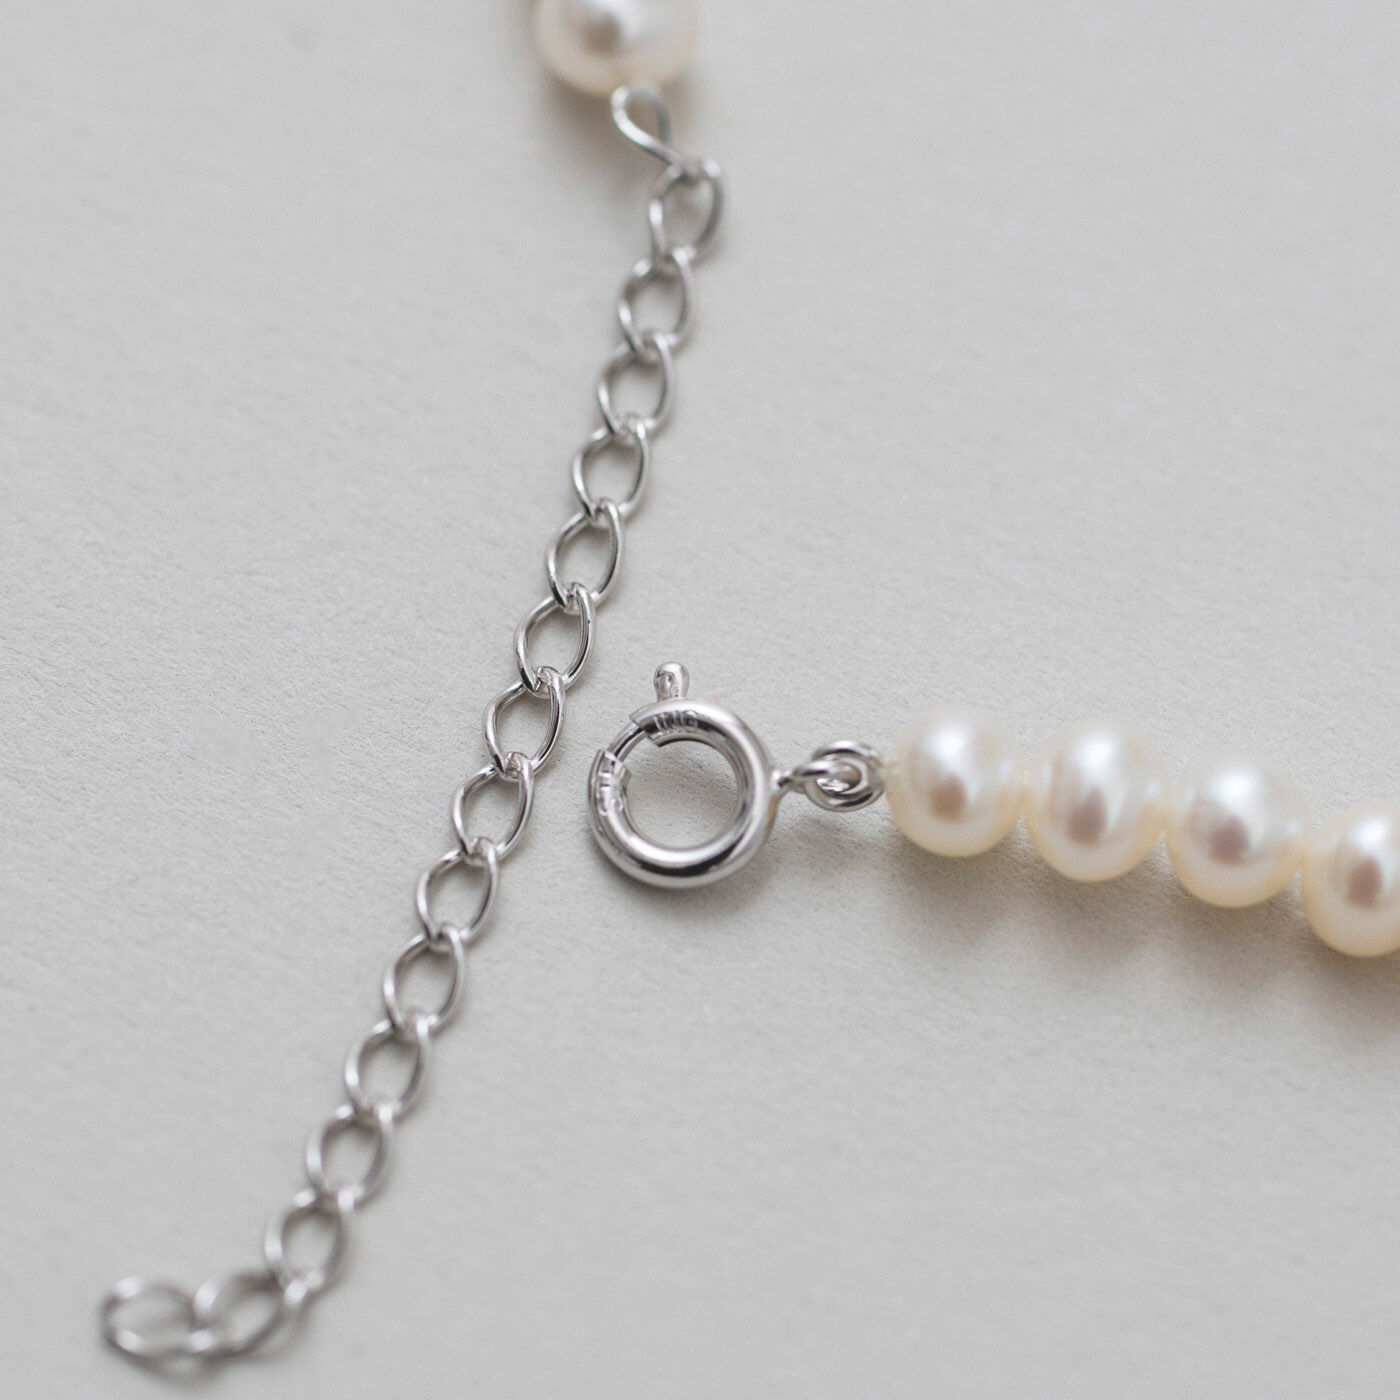 ＆Stories|神戸の老舗真珠メーカーが手掛けた 淡水パールのネックレス〈シルバー925〉|シンプルなチェーンは、サイズ調節も可能。短くしてチョーカー風にしたり、似合う長さで使えます。